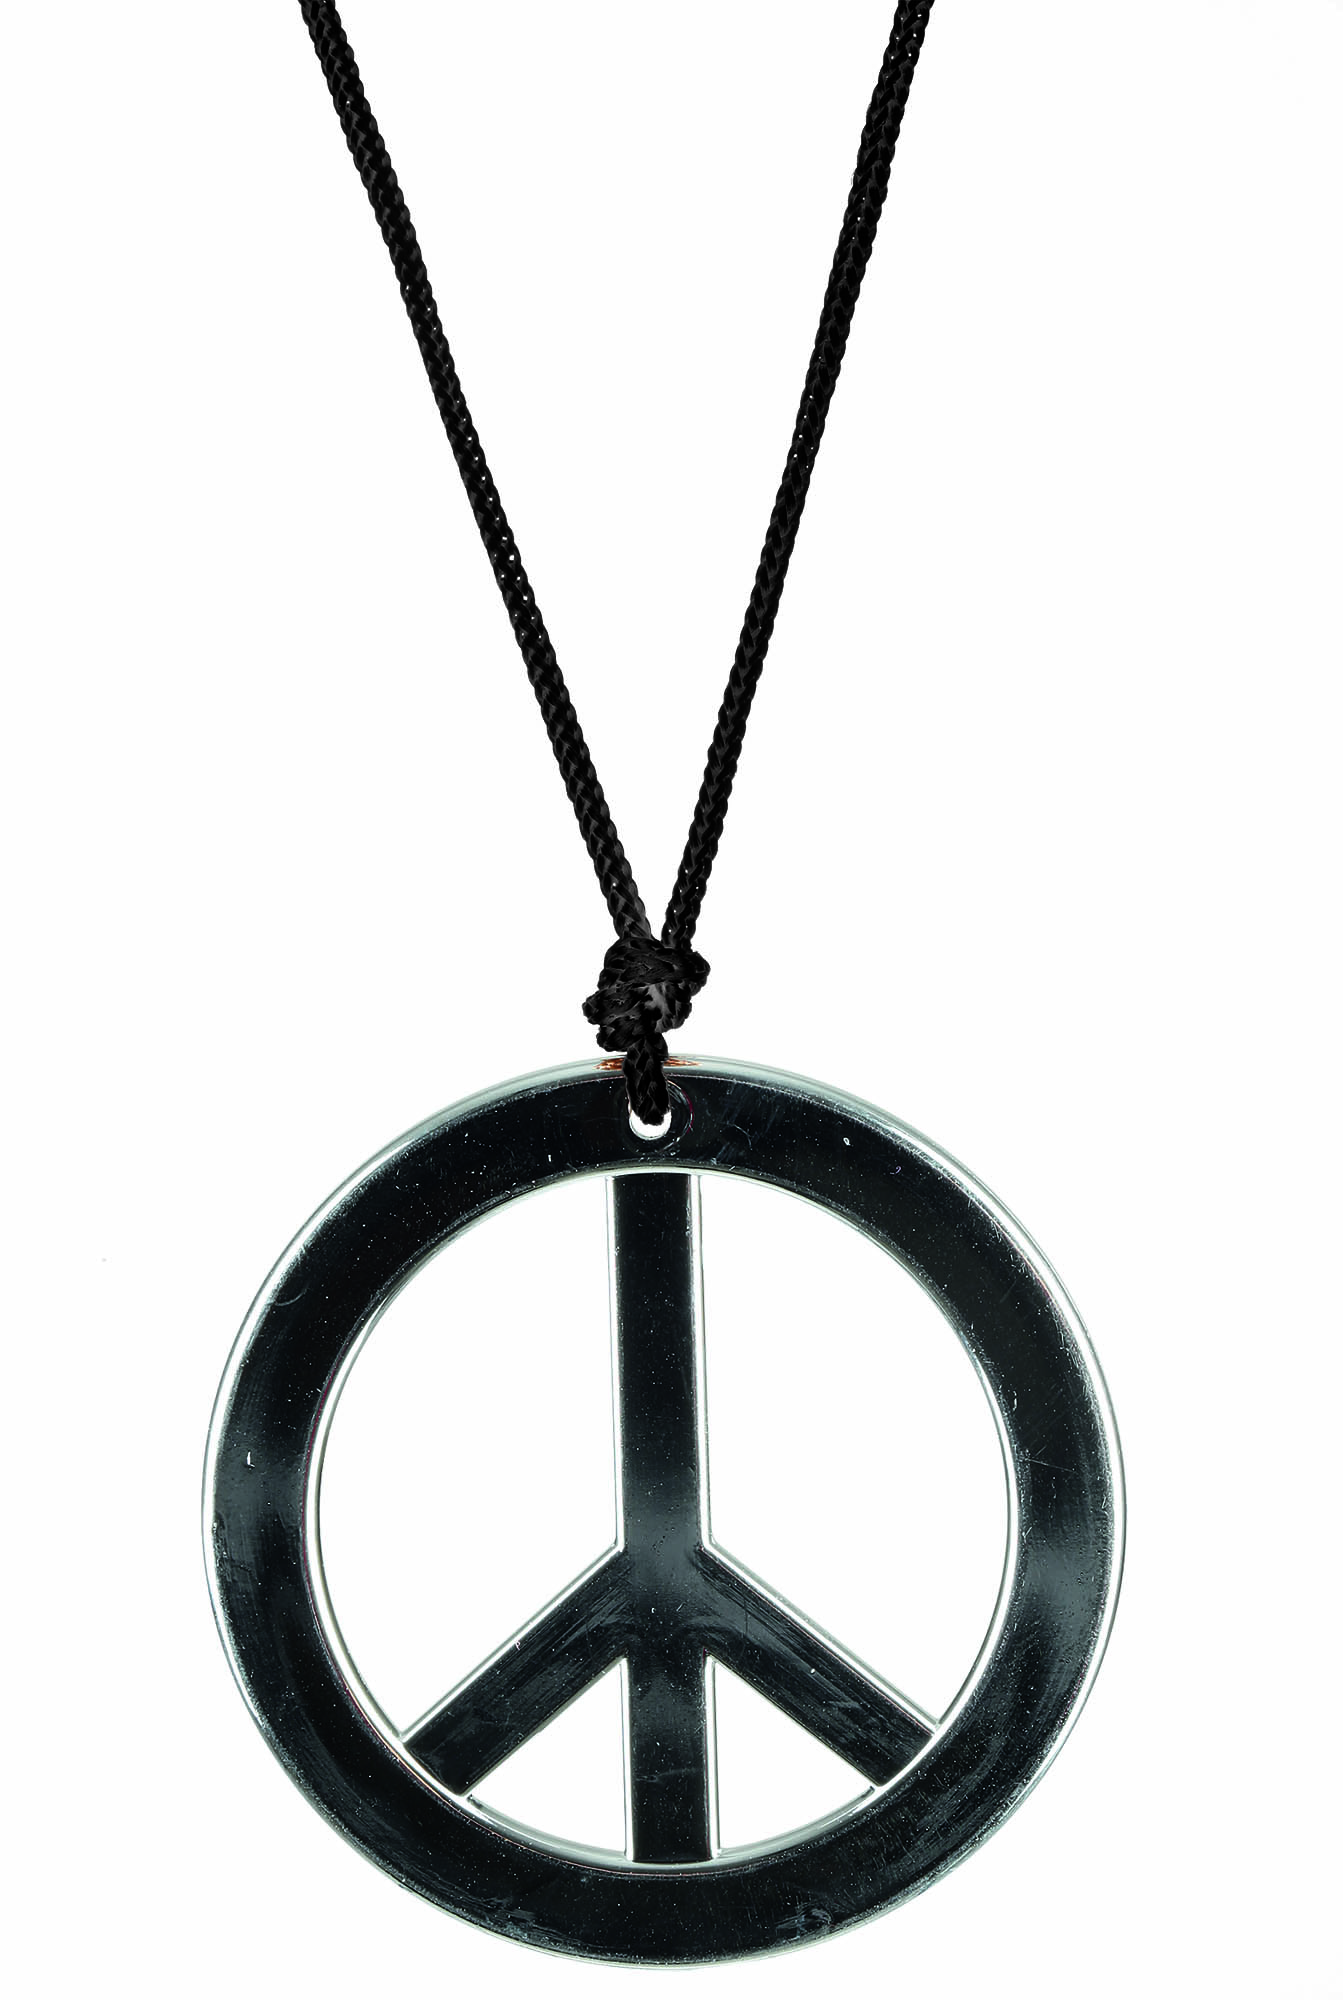 Peace chain